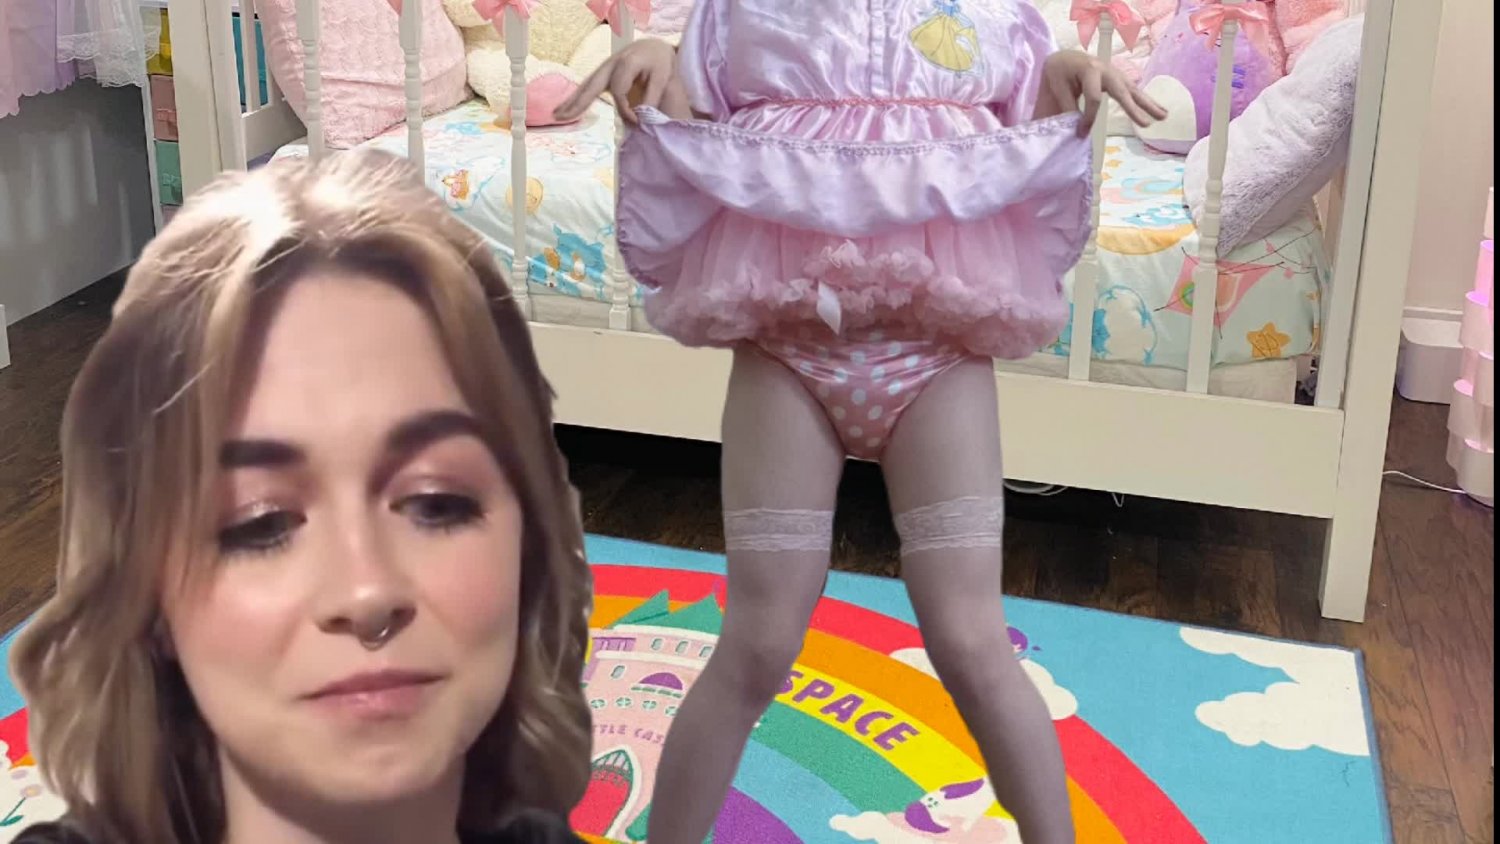 swinger sex websites diaper baby humiliation